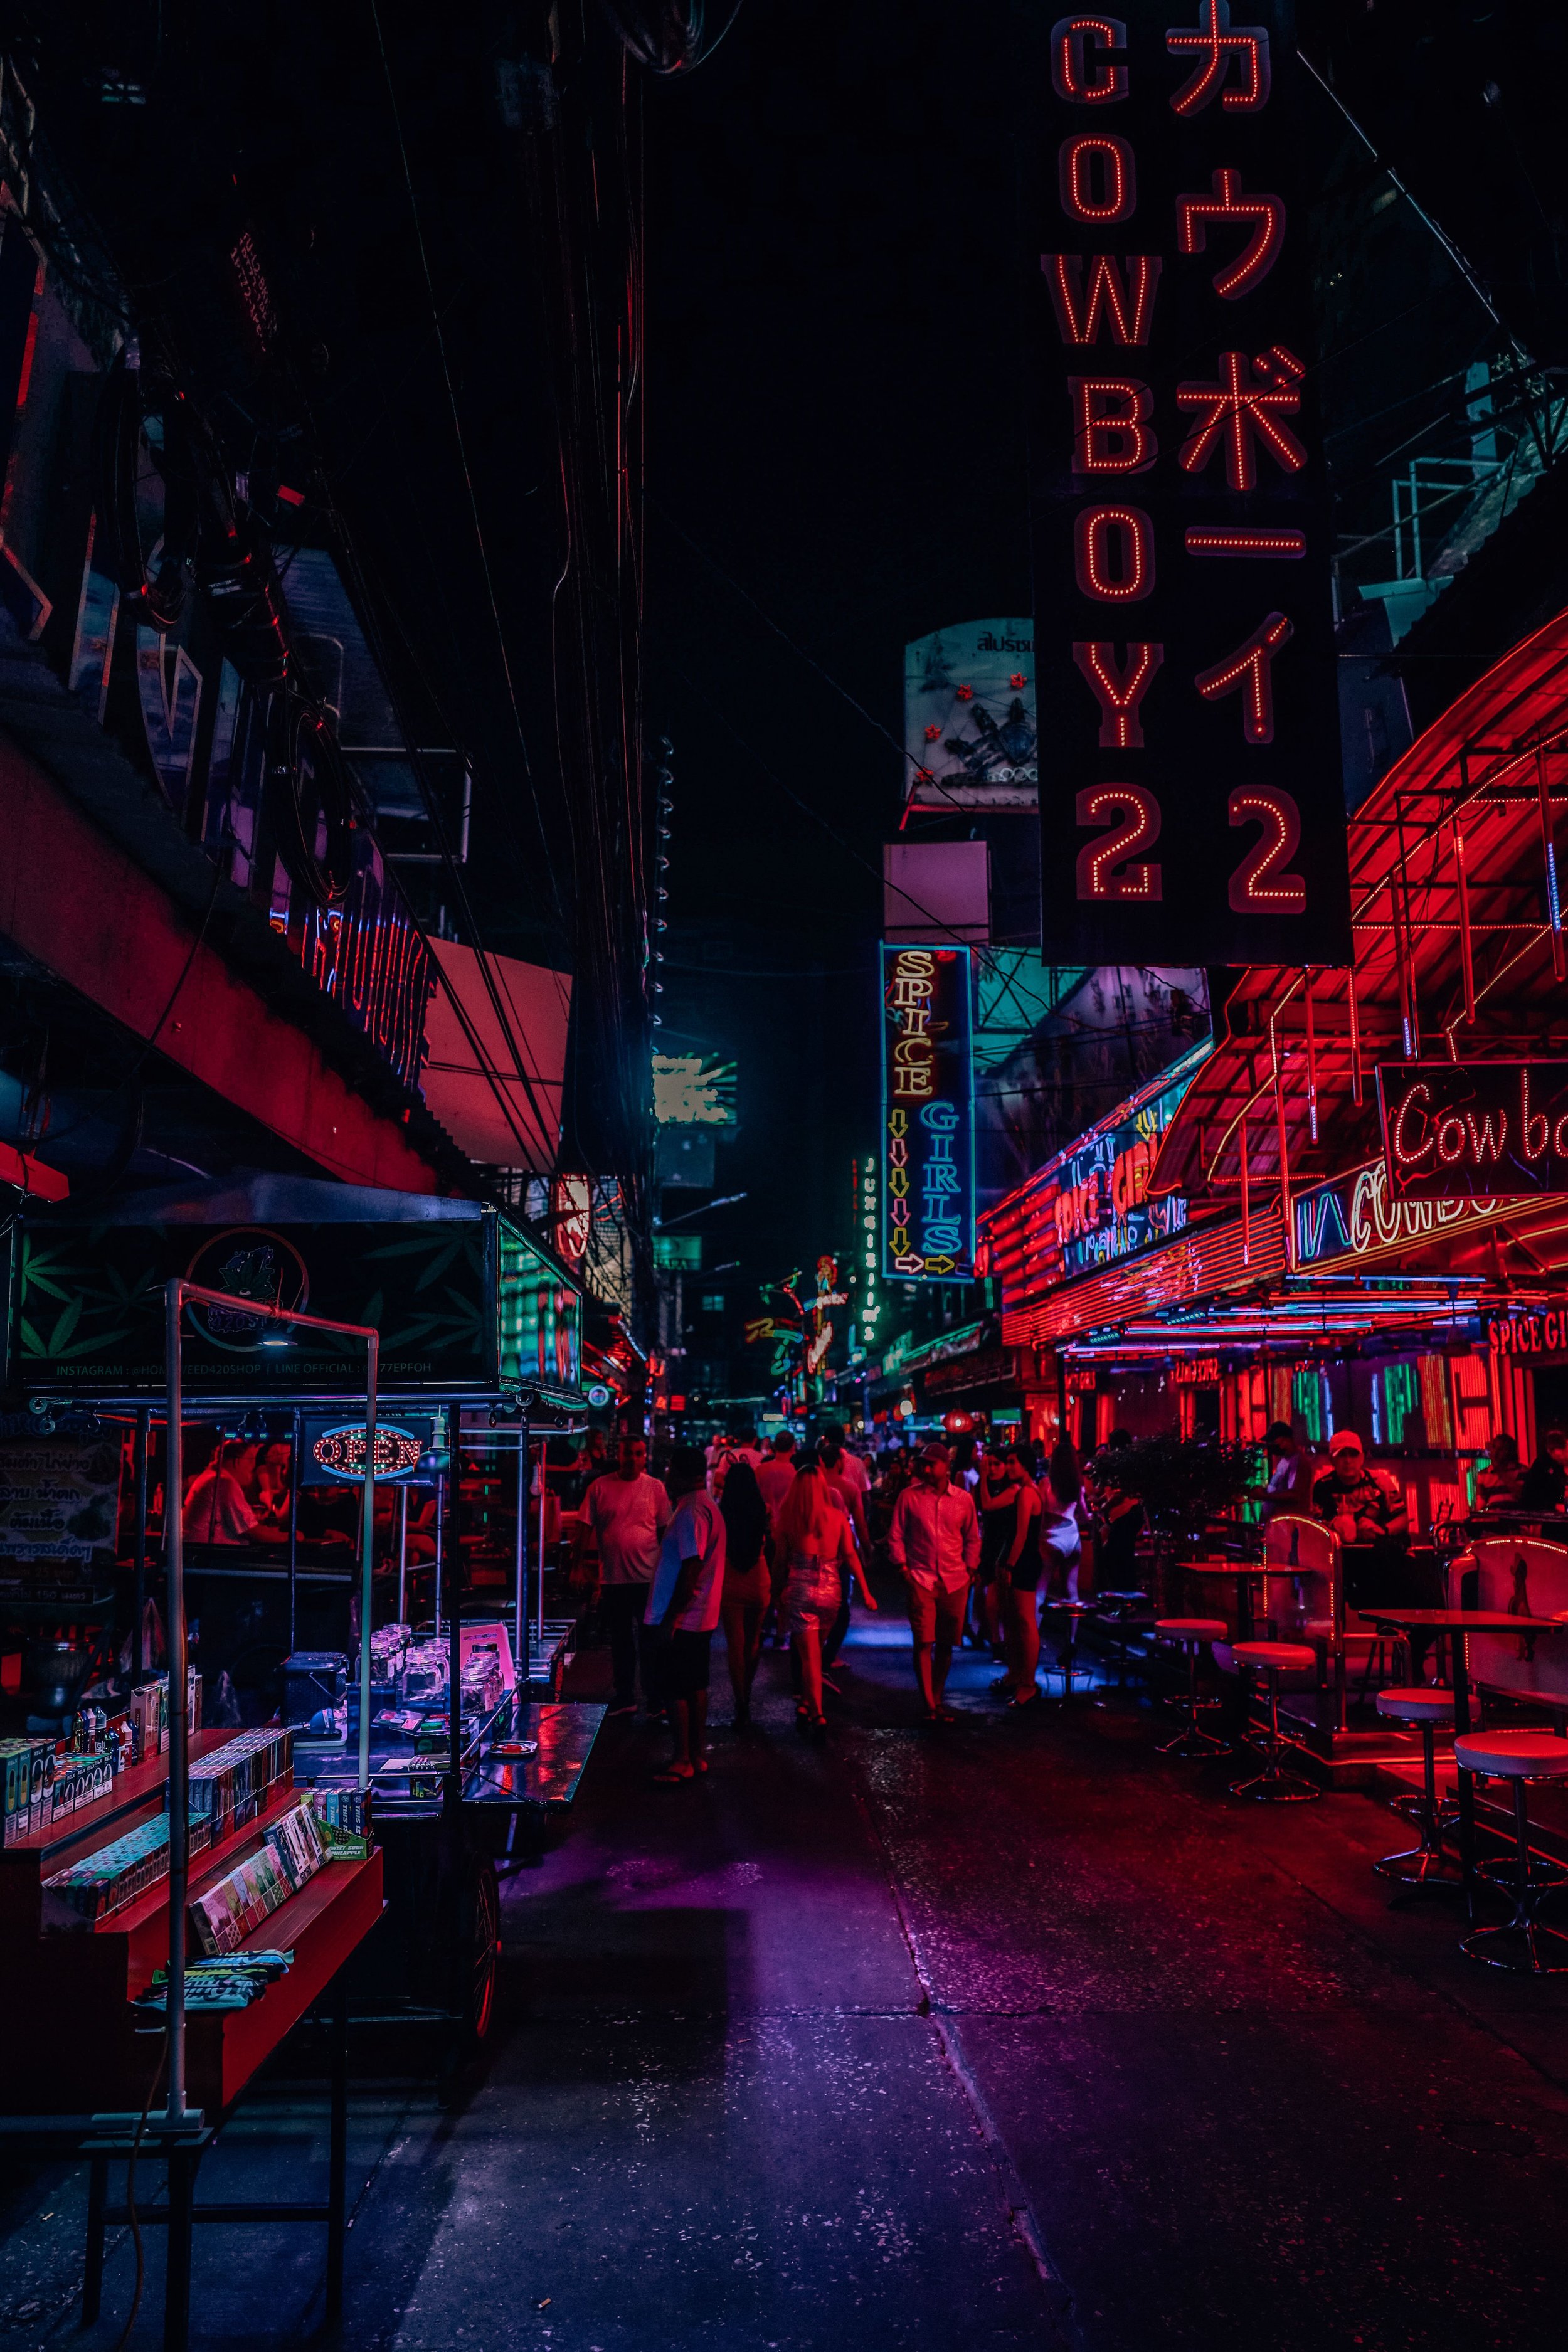 La rue Soi Cowboy la nuit - Bangkok - Thaïlande